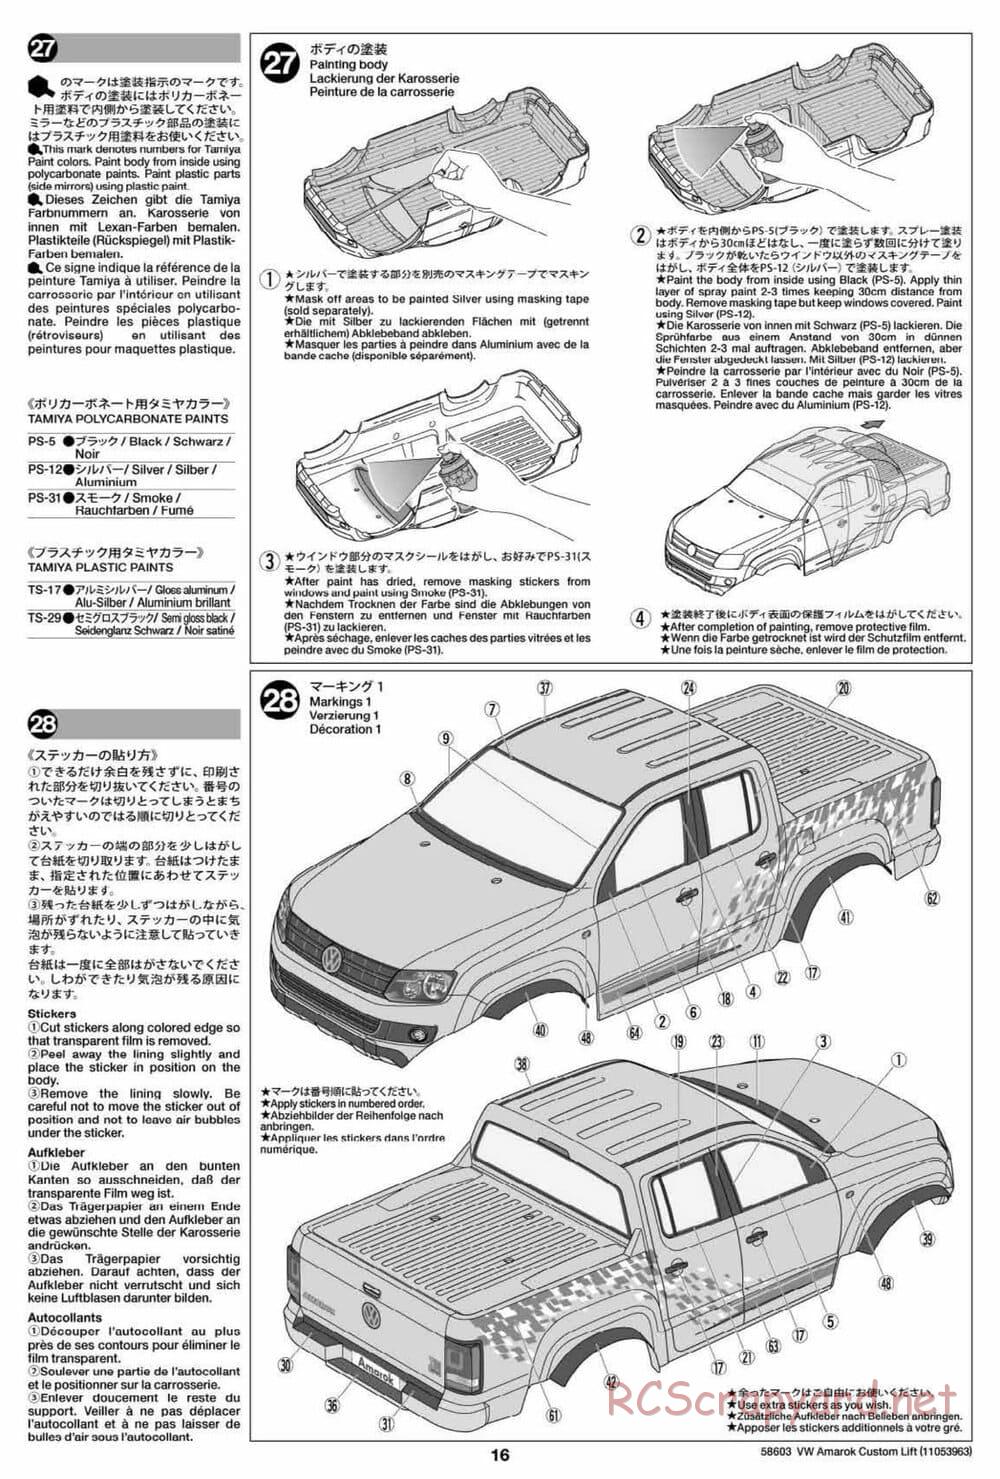 Tamiya - Volkswagen Amarok Custom Lift - WT-01N Chassis - Manual - Page 16